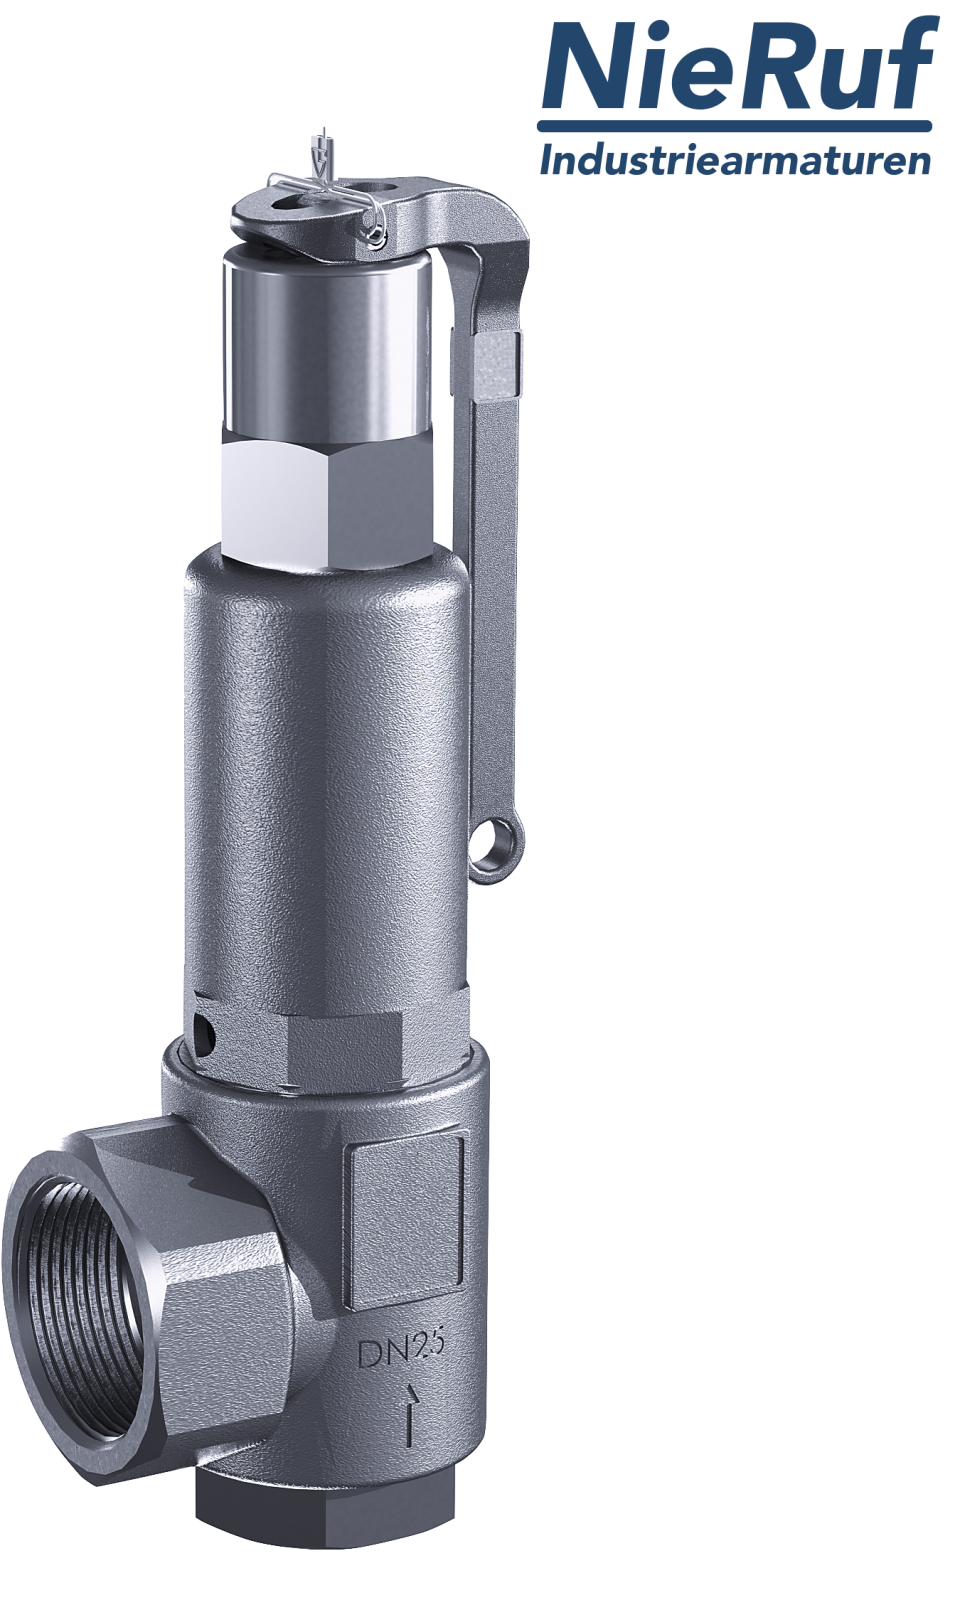 safety valve 1 1/4" x 2" fm SV05 neutral liquid media, stainless steel FKM, with lever